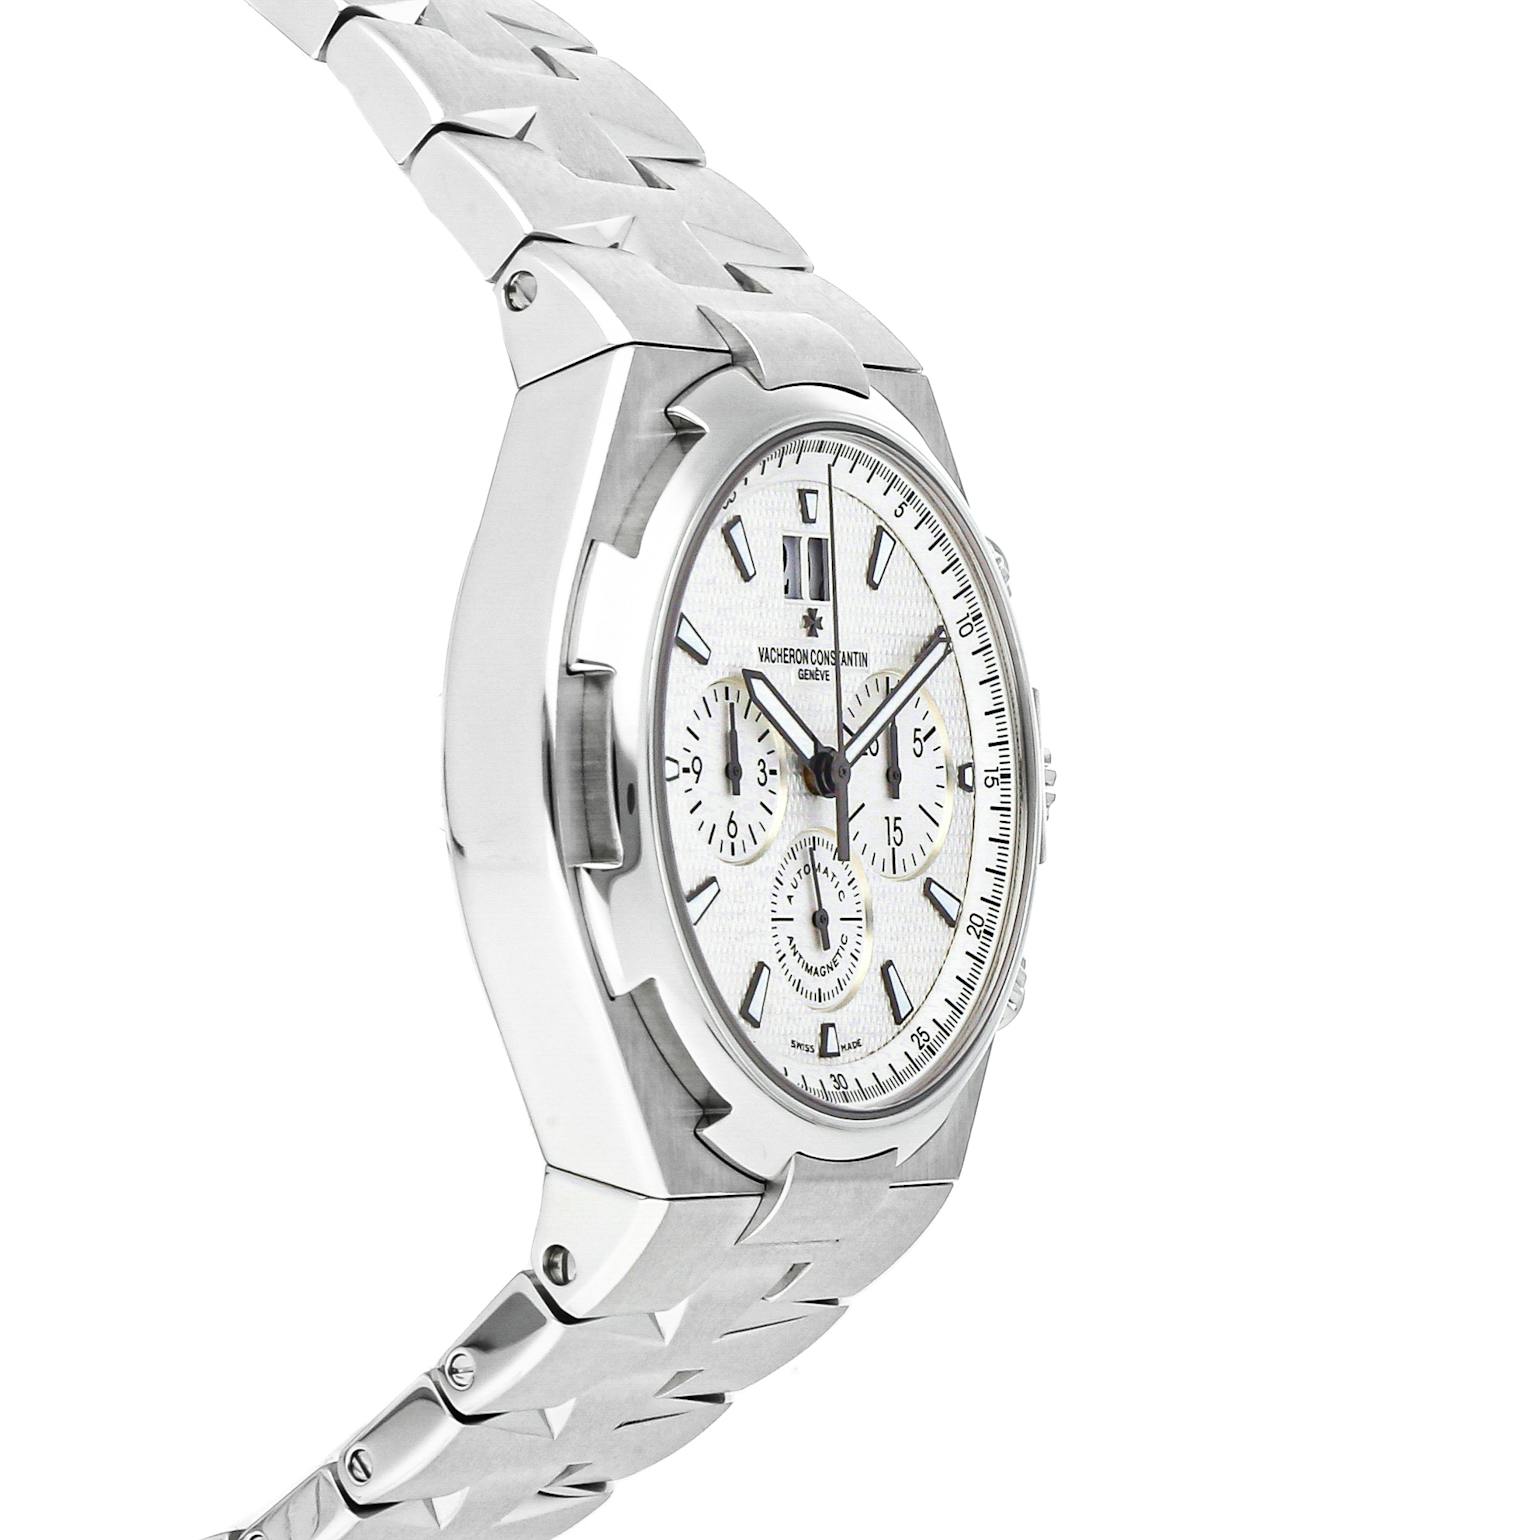 Vacheron Constantin Overseas Chronograph white dial - Perfect condition -  serviced - with box 49150 » Monacowatch